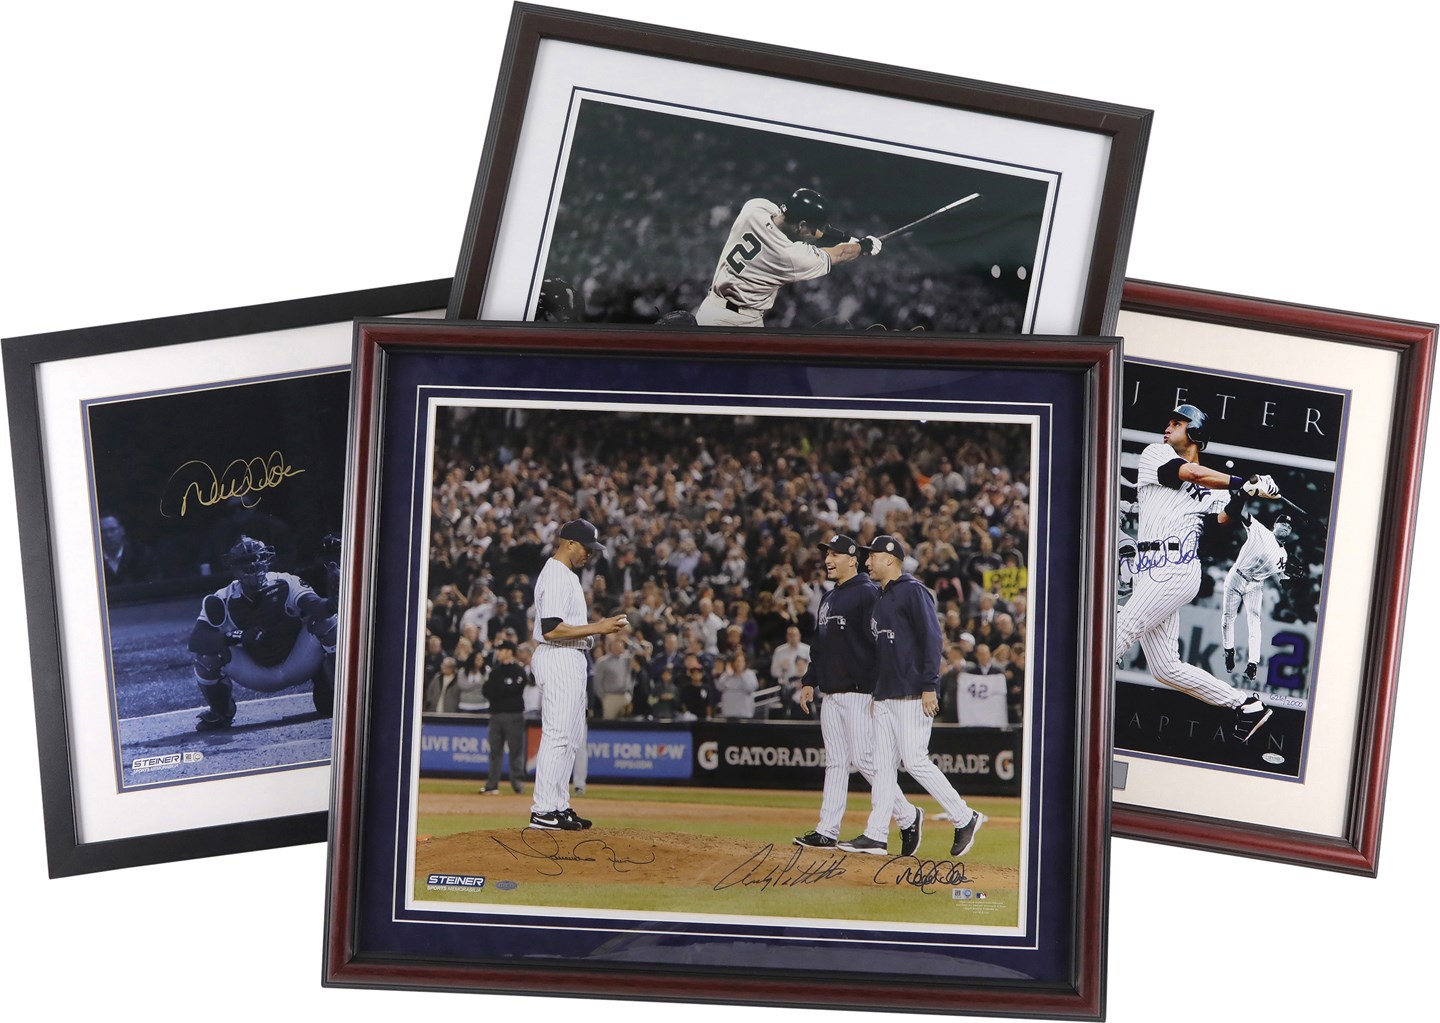 Baseball Autographs - Yankees Core Four Plus Three Derek Jeter Signed Limited Edition 16x20" Photographs (Steiner)